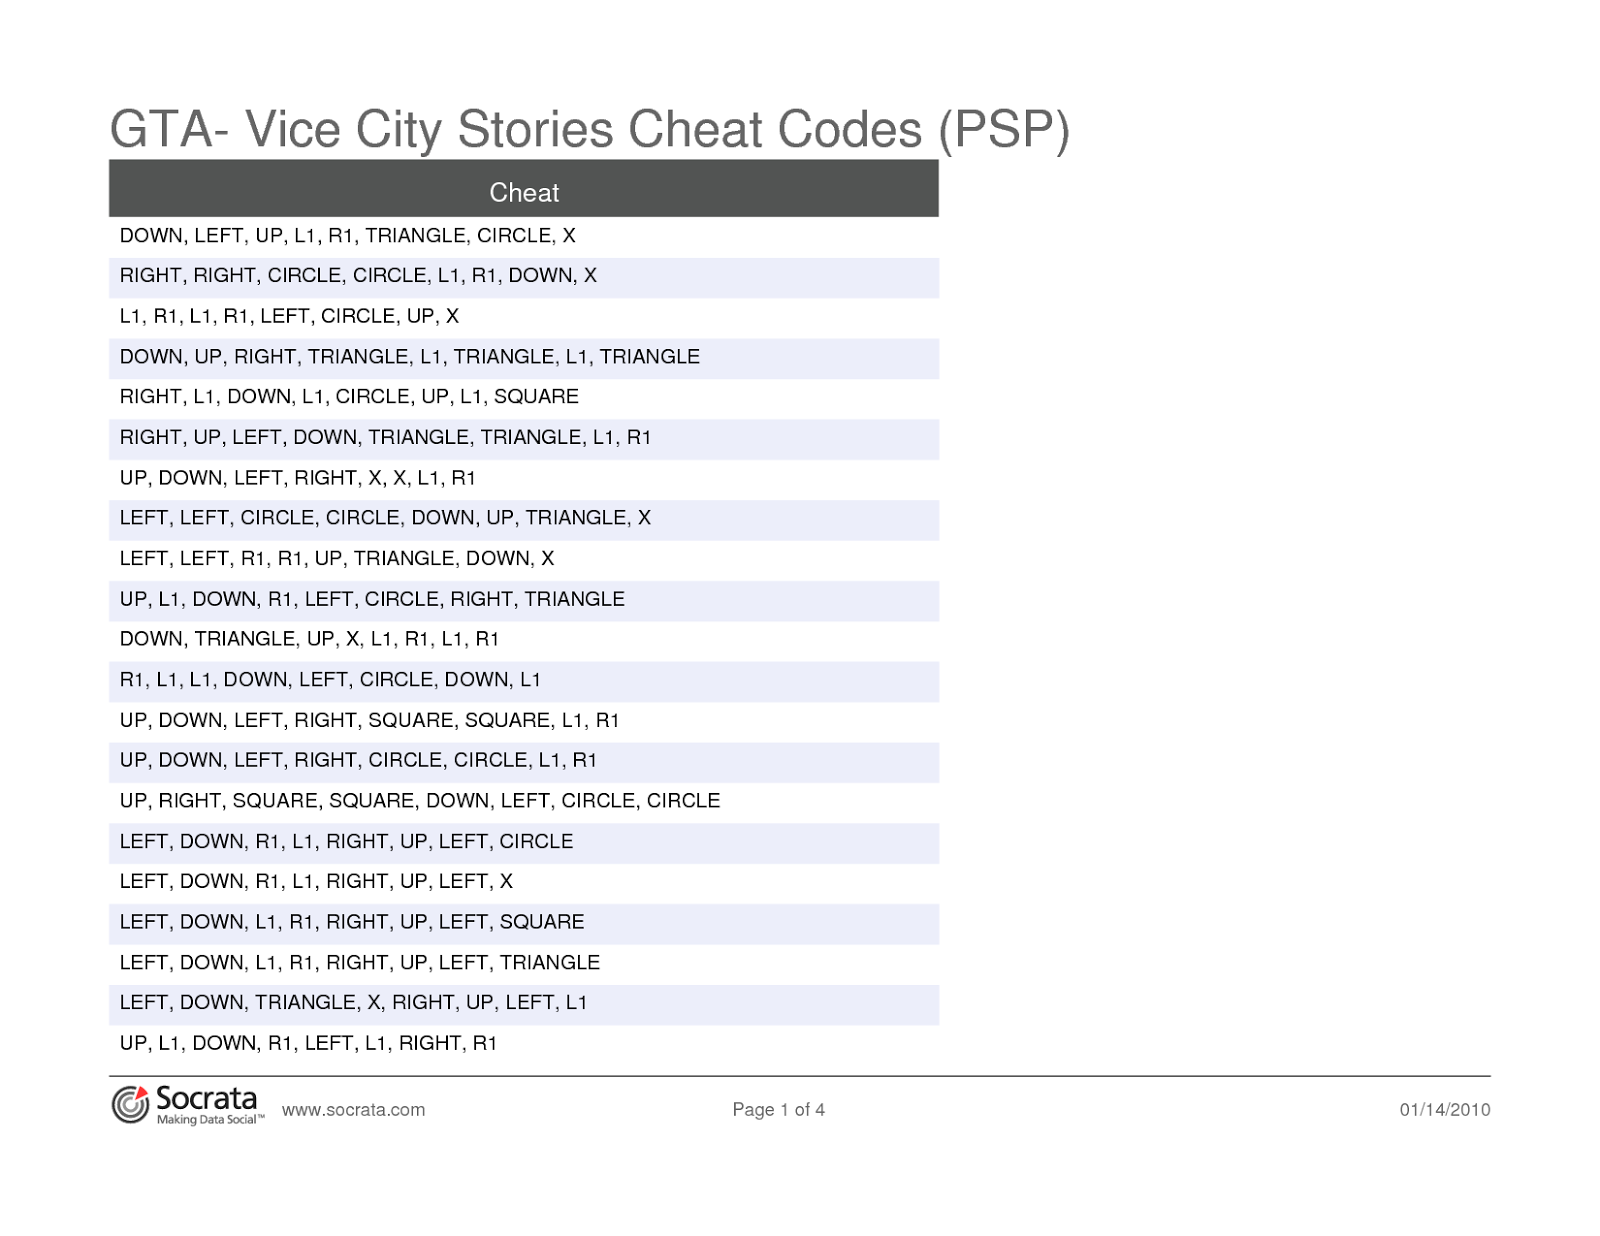 cheat codes for gta liberty city psp